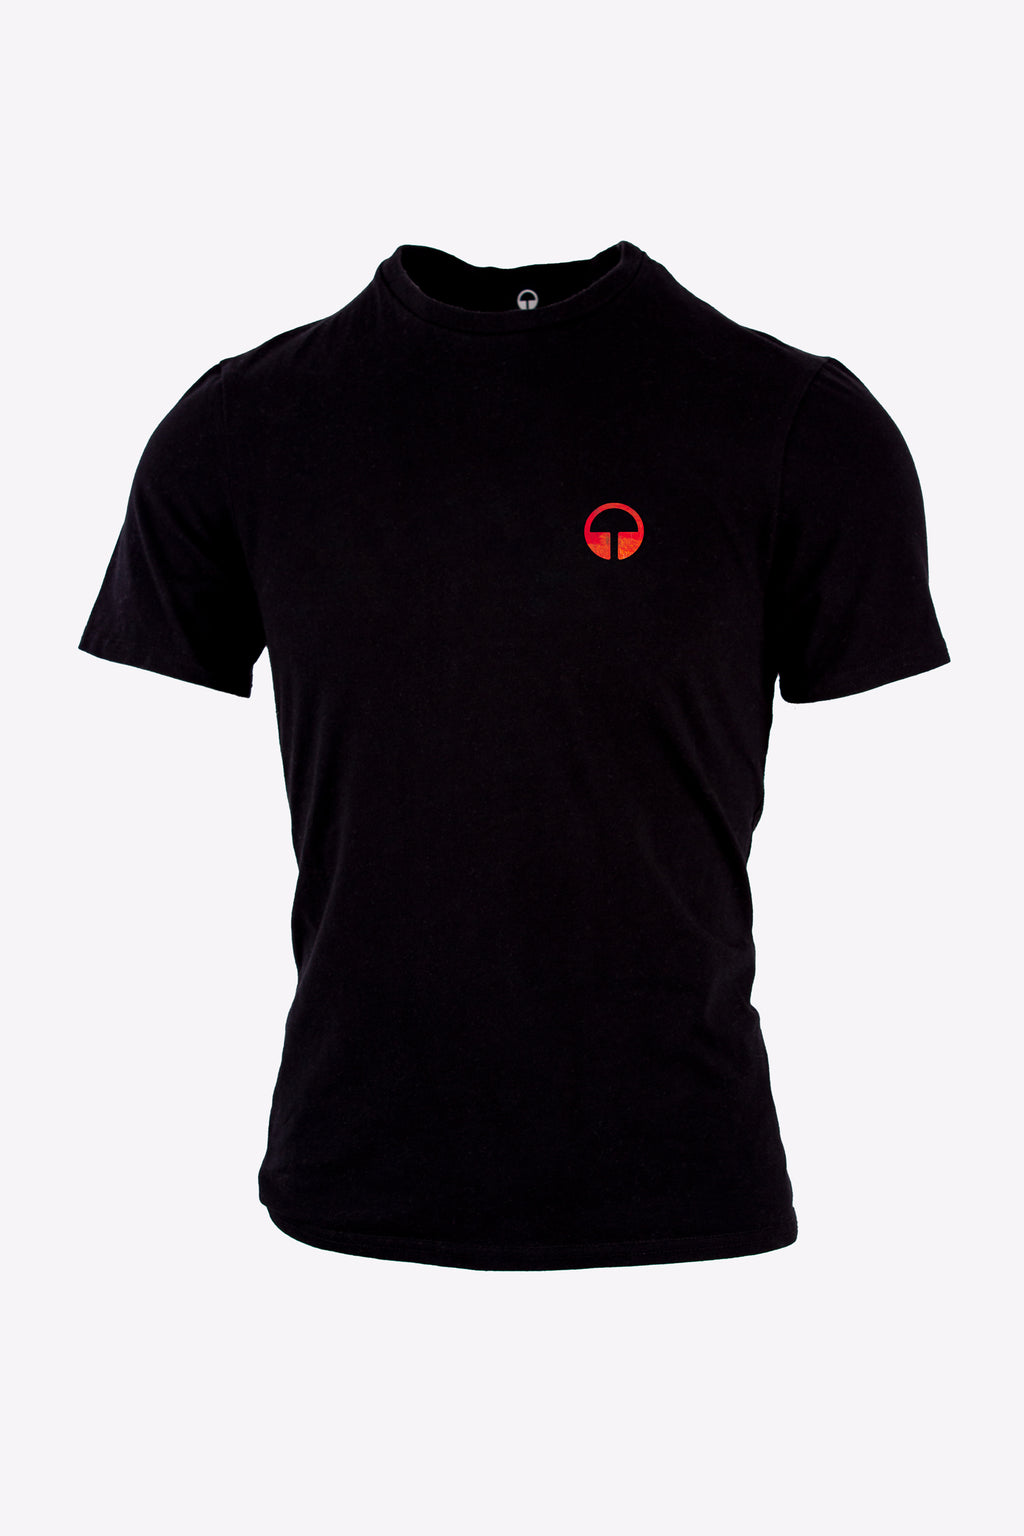 Men's Euphoric T-shirt - Black